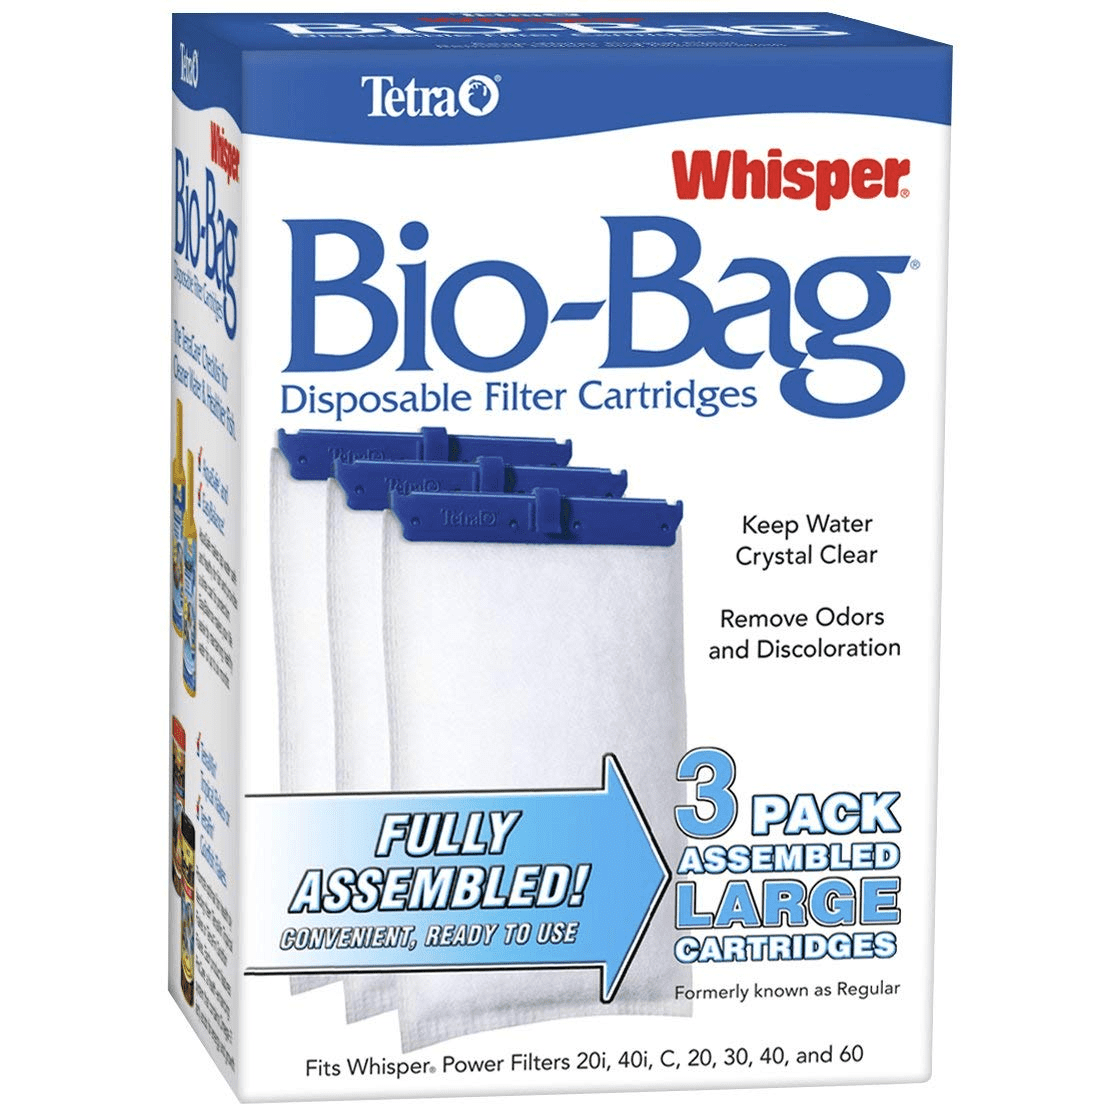 Bio Bag Filter Cartridges Tetra Whisper Assembled Aquarium Tank Large 3 Pack 